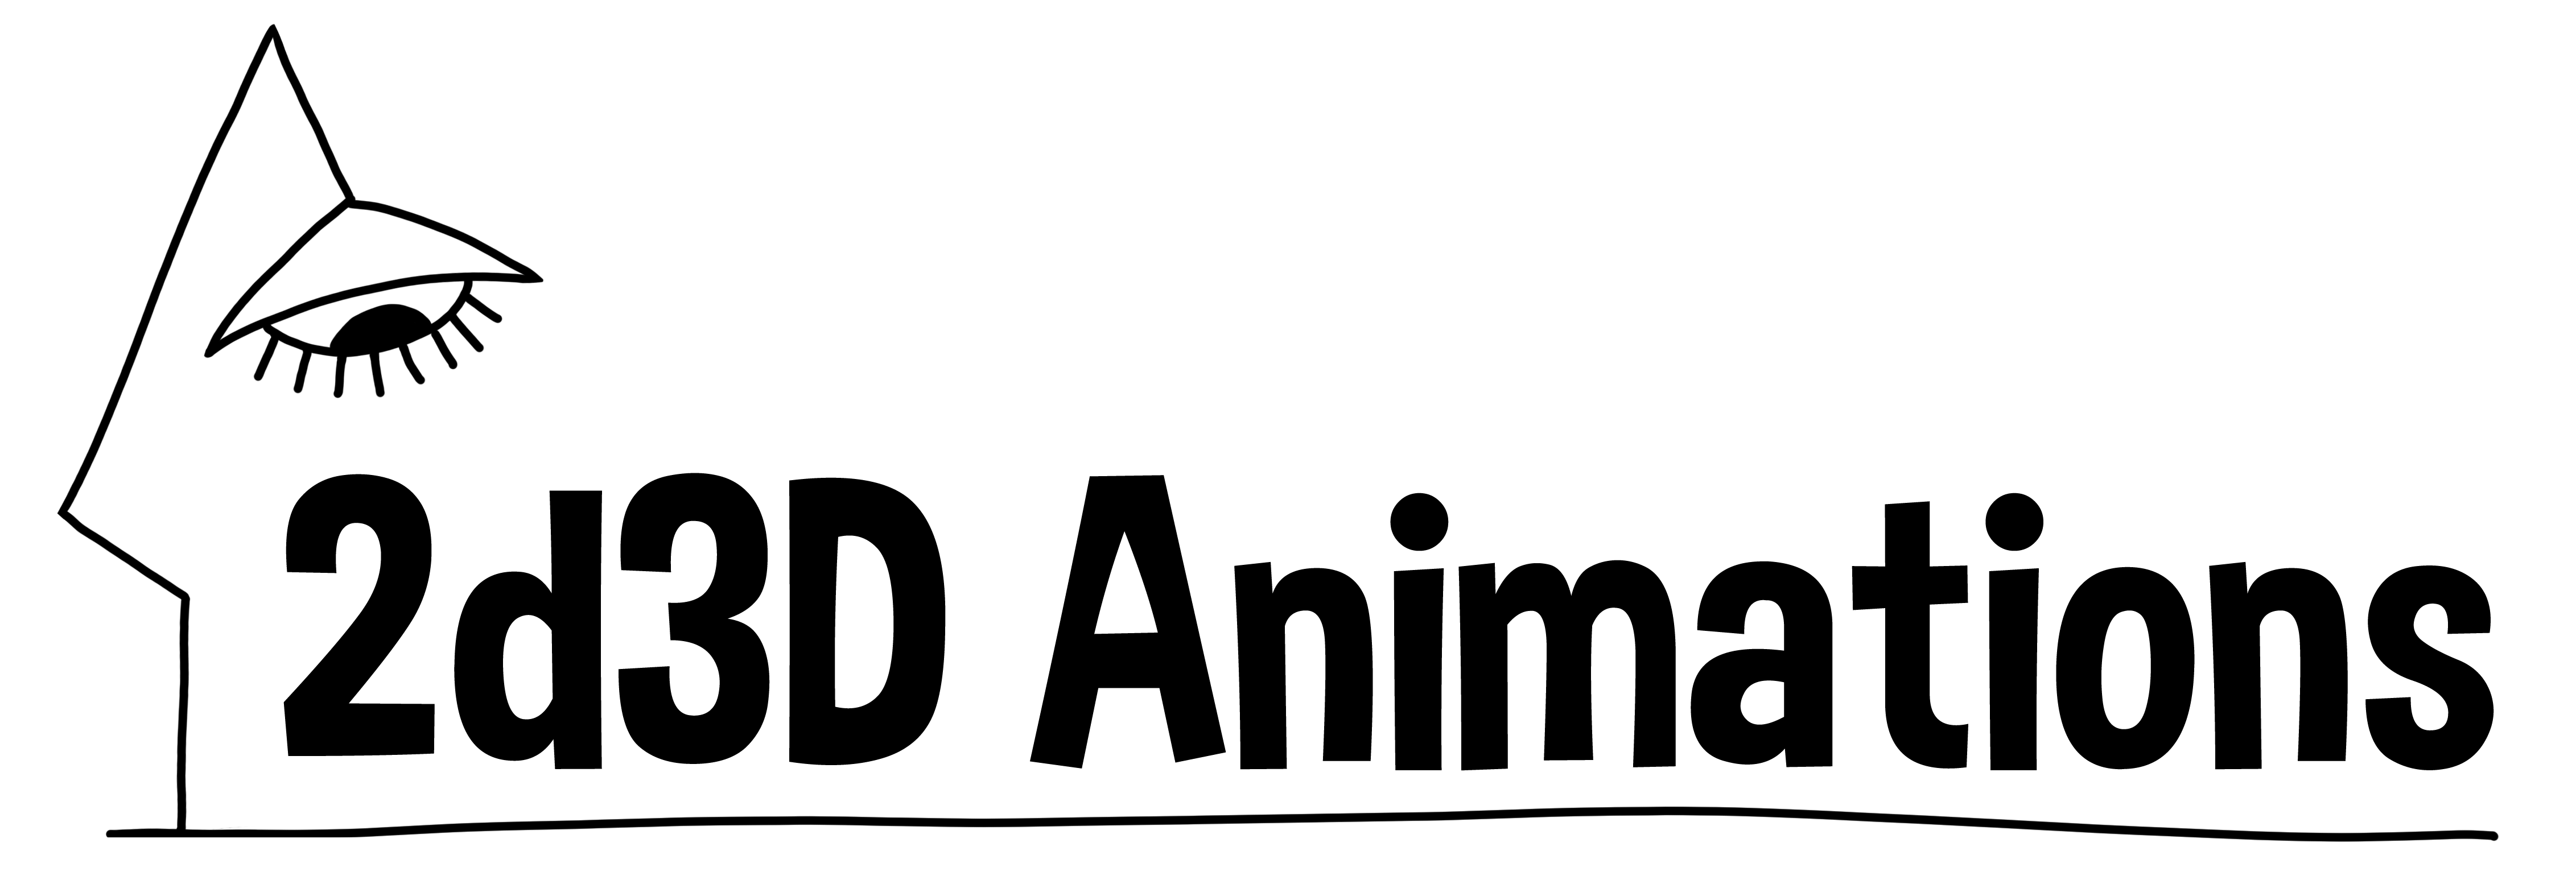 2d3d-animations